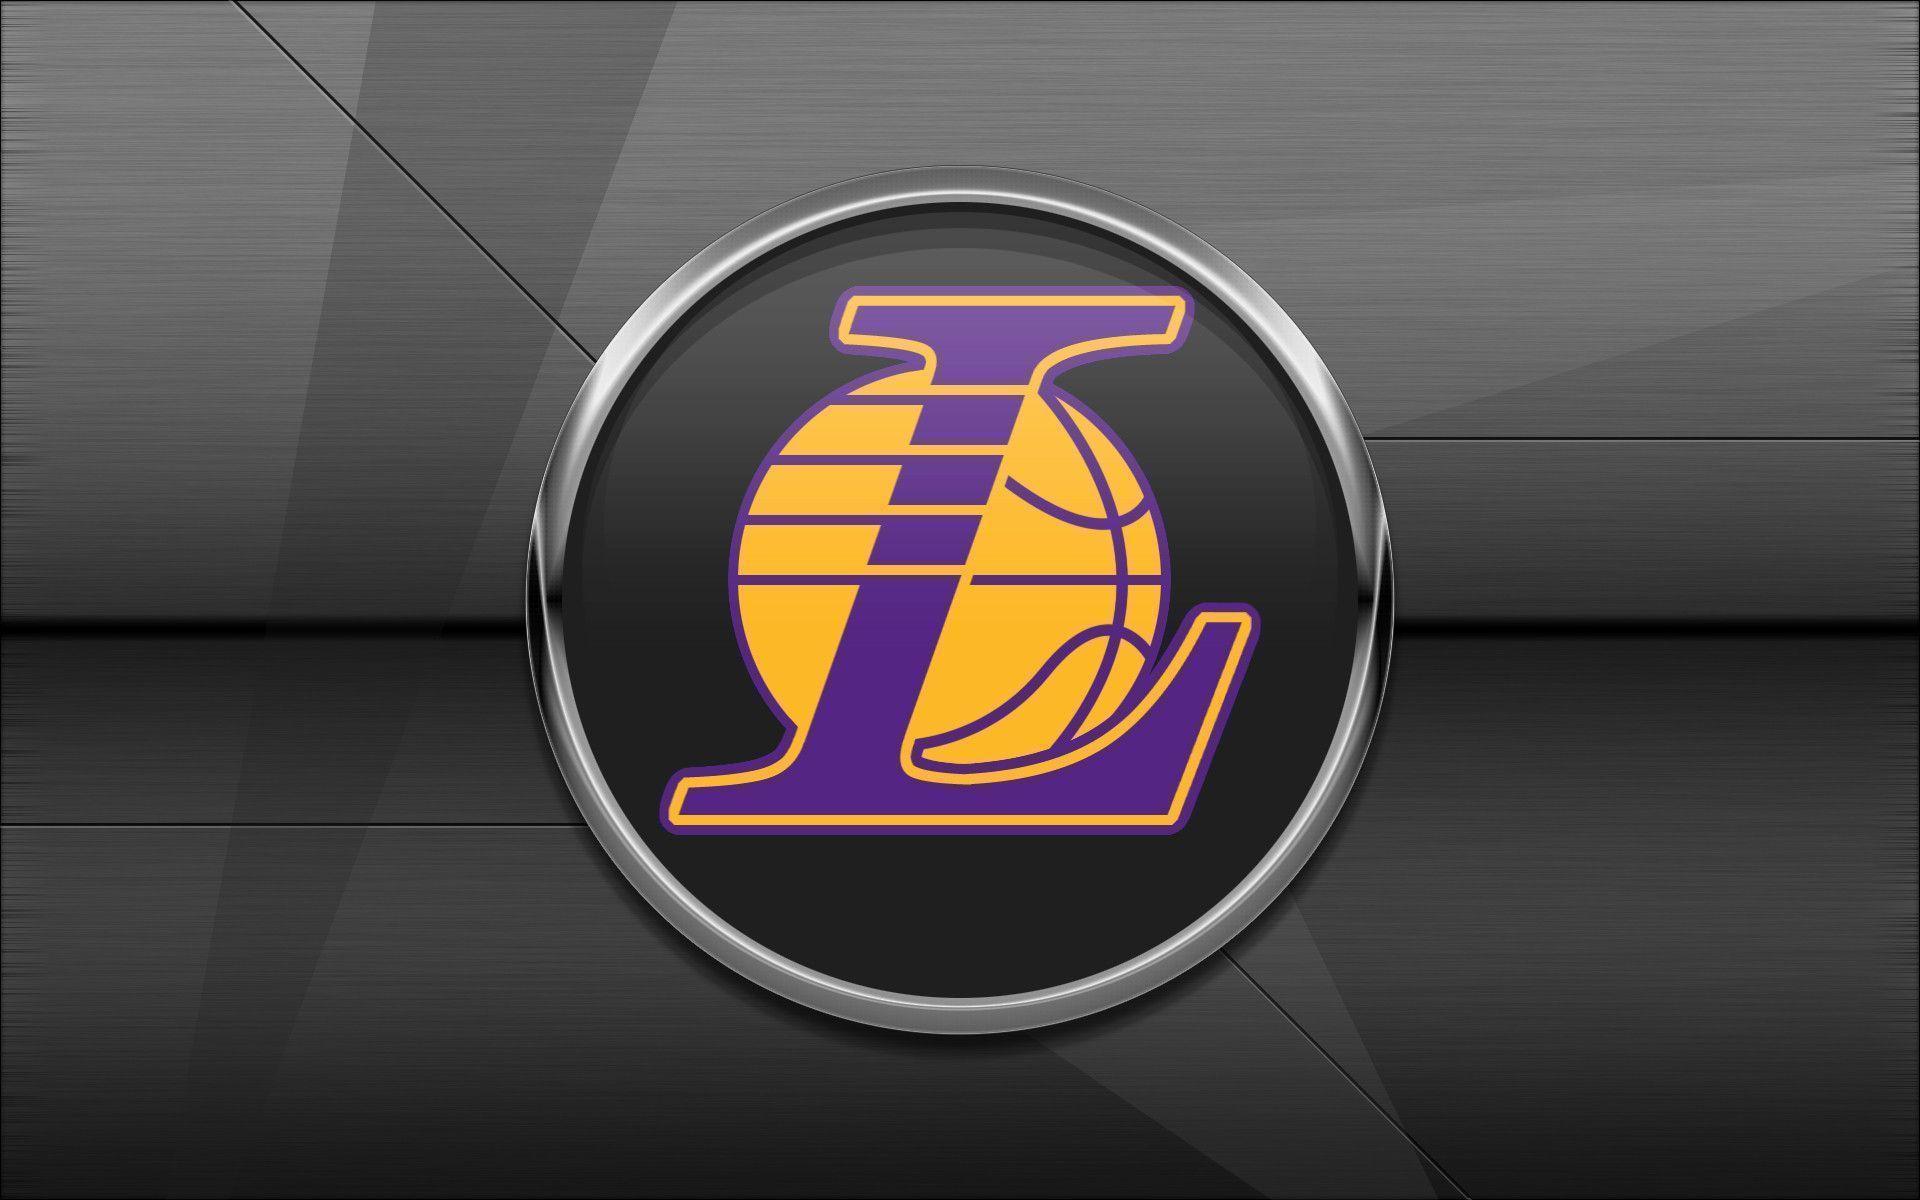 Lakers Black Logo Wallpaper Image & Picture